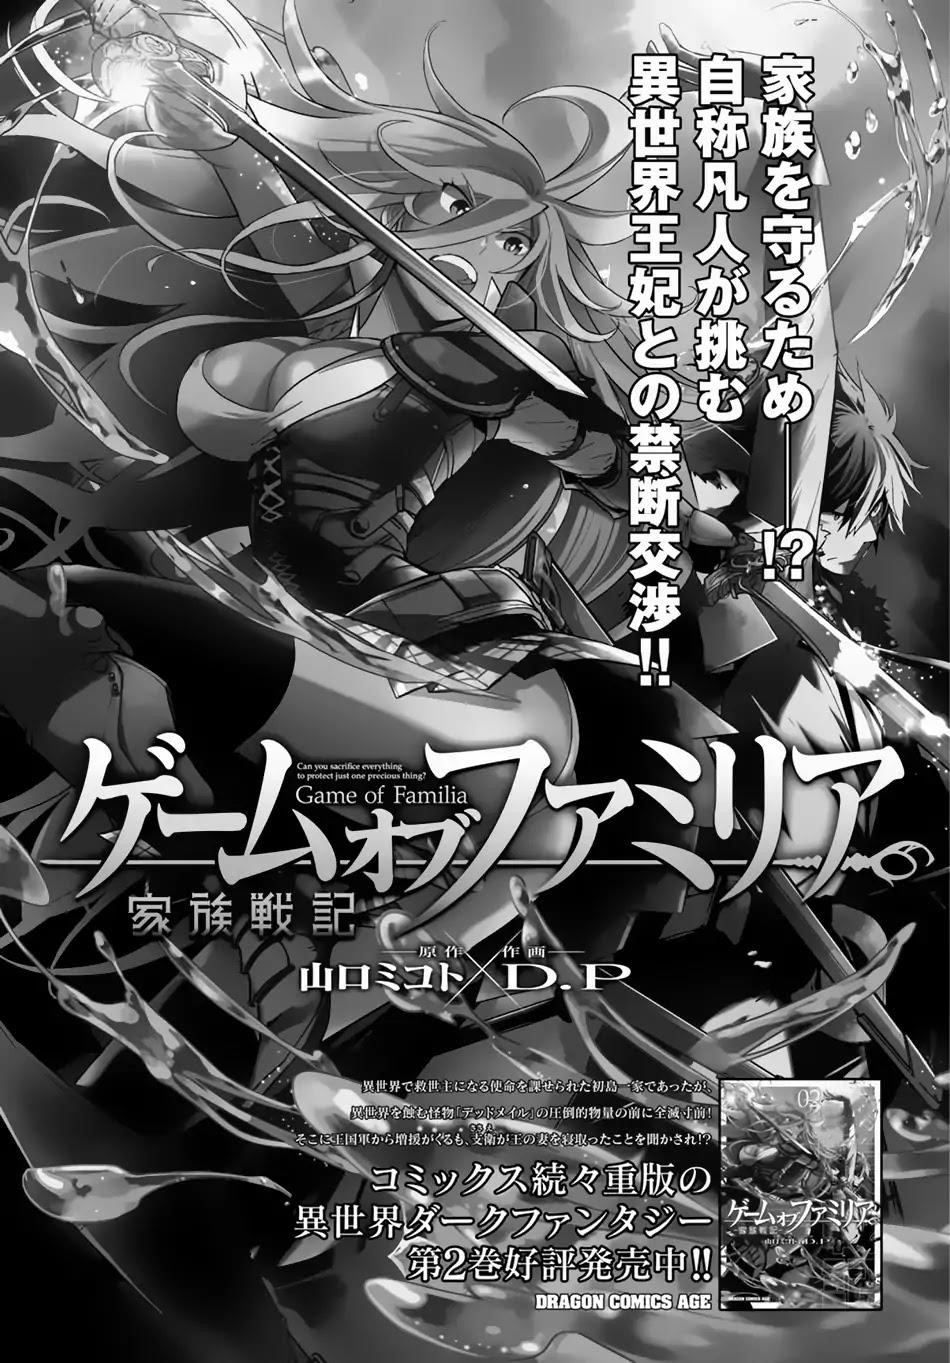 Read Manga Game Obu Familia Family Senki Chapter 15 Read Manga Online Manga Catalog 1